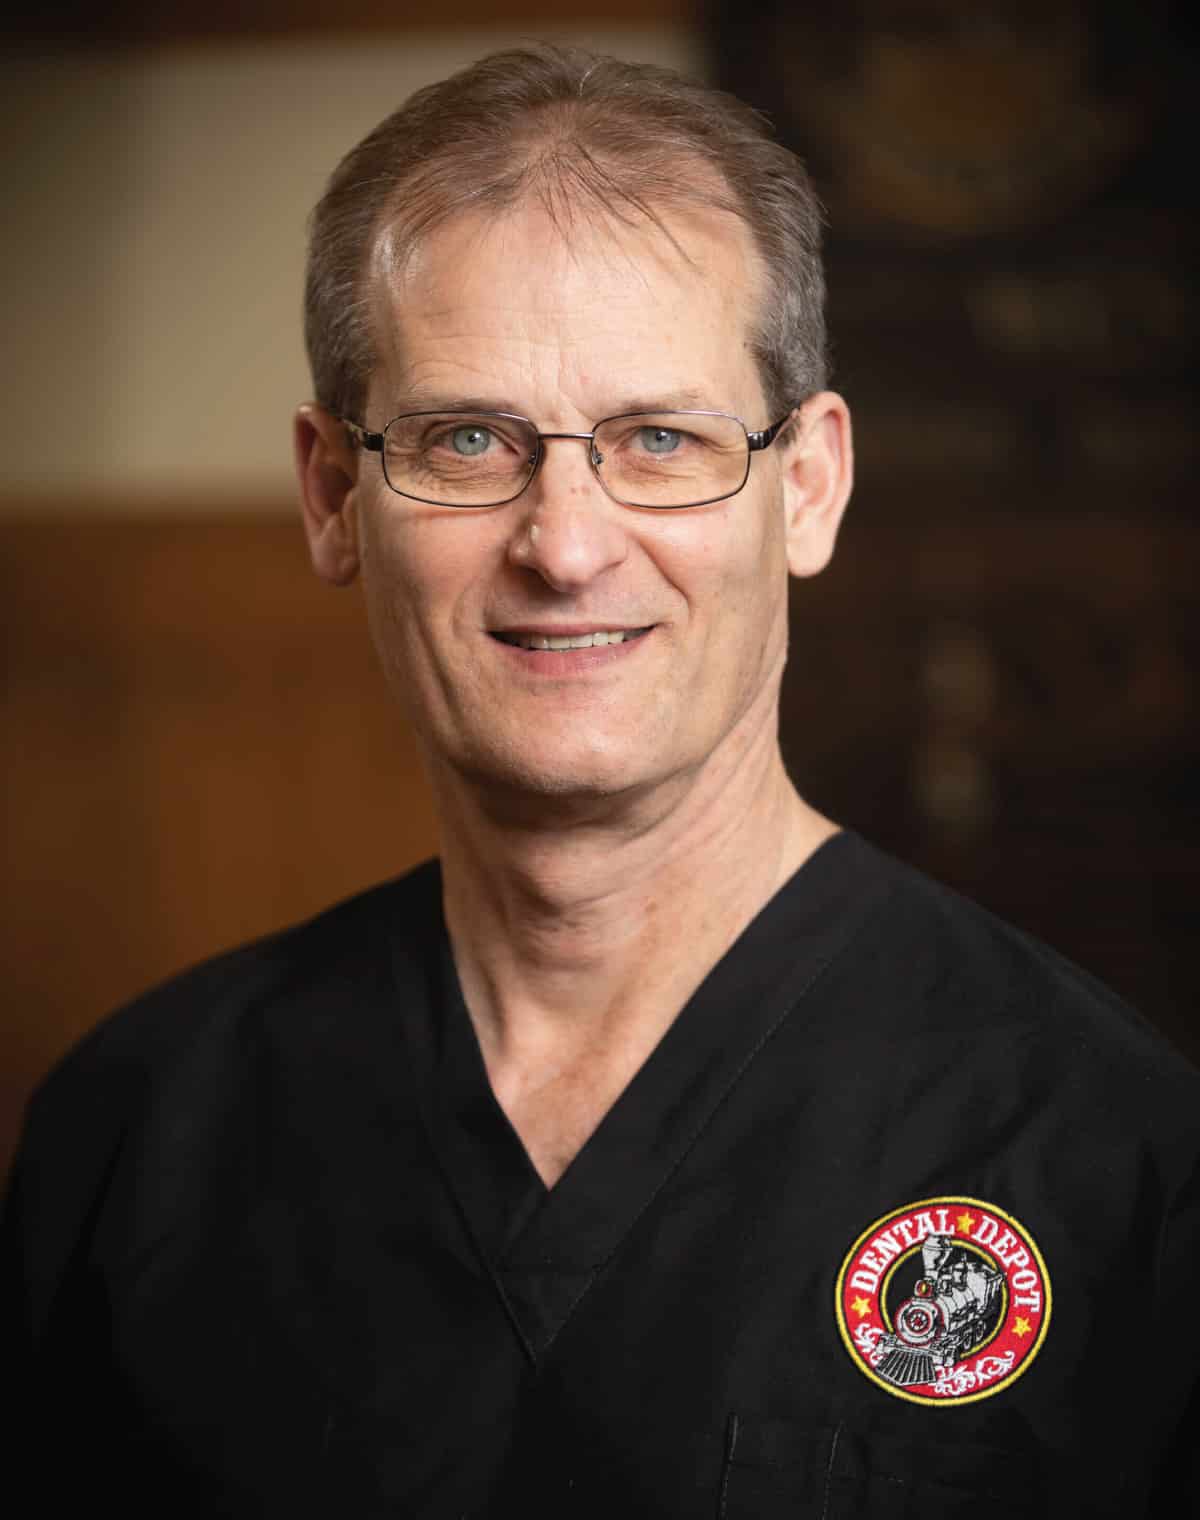 Dr. Stephen Herren of dental depot south okc